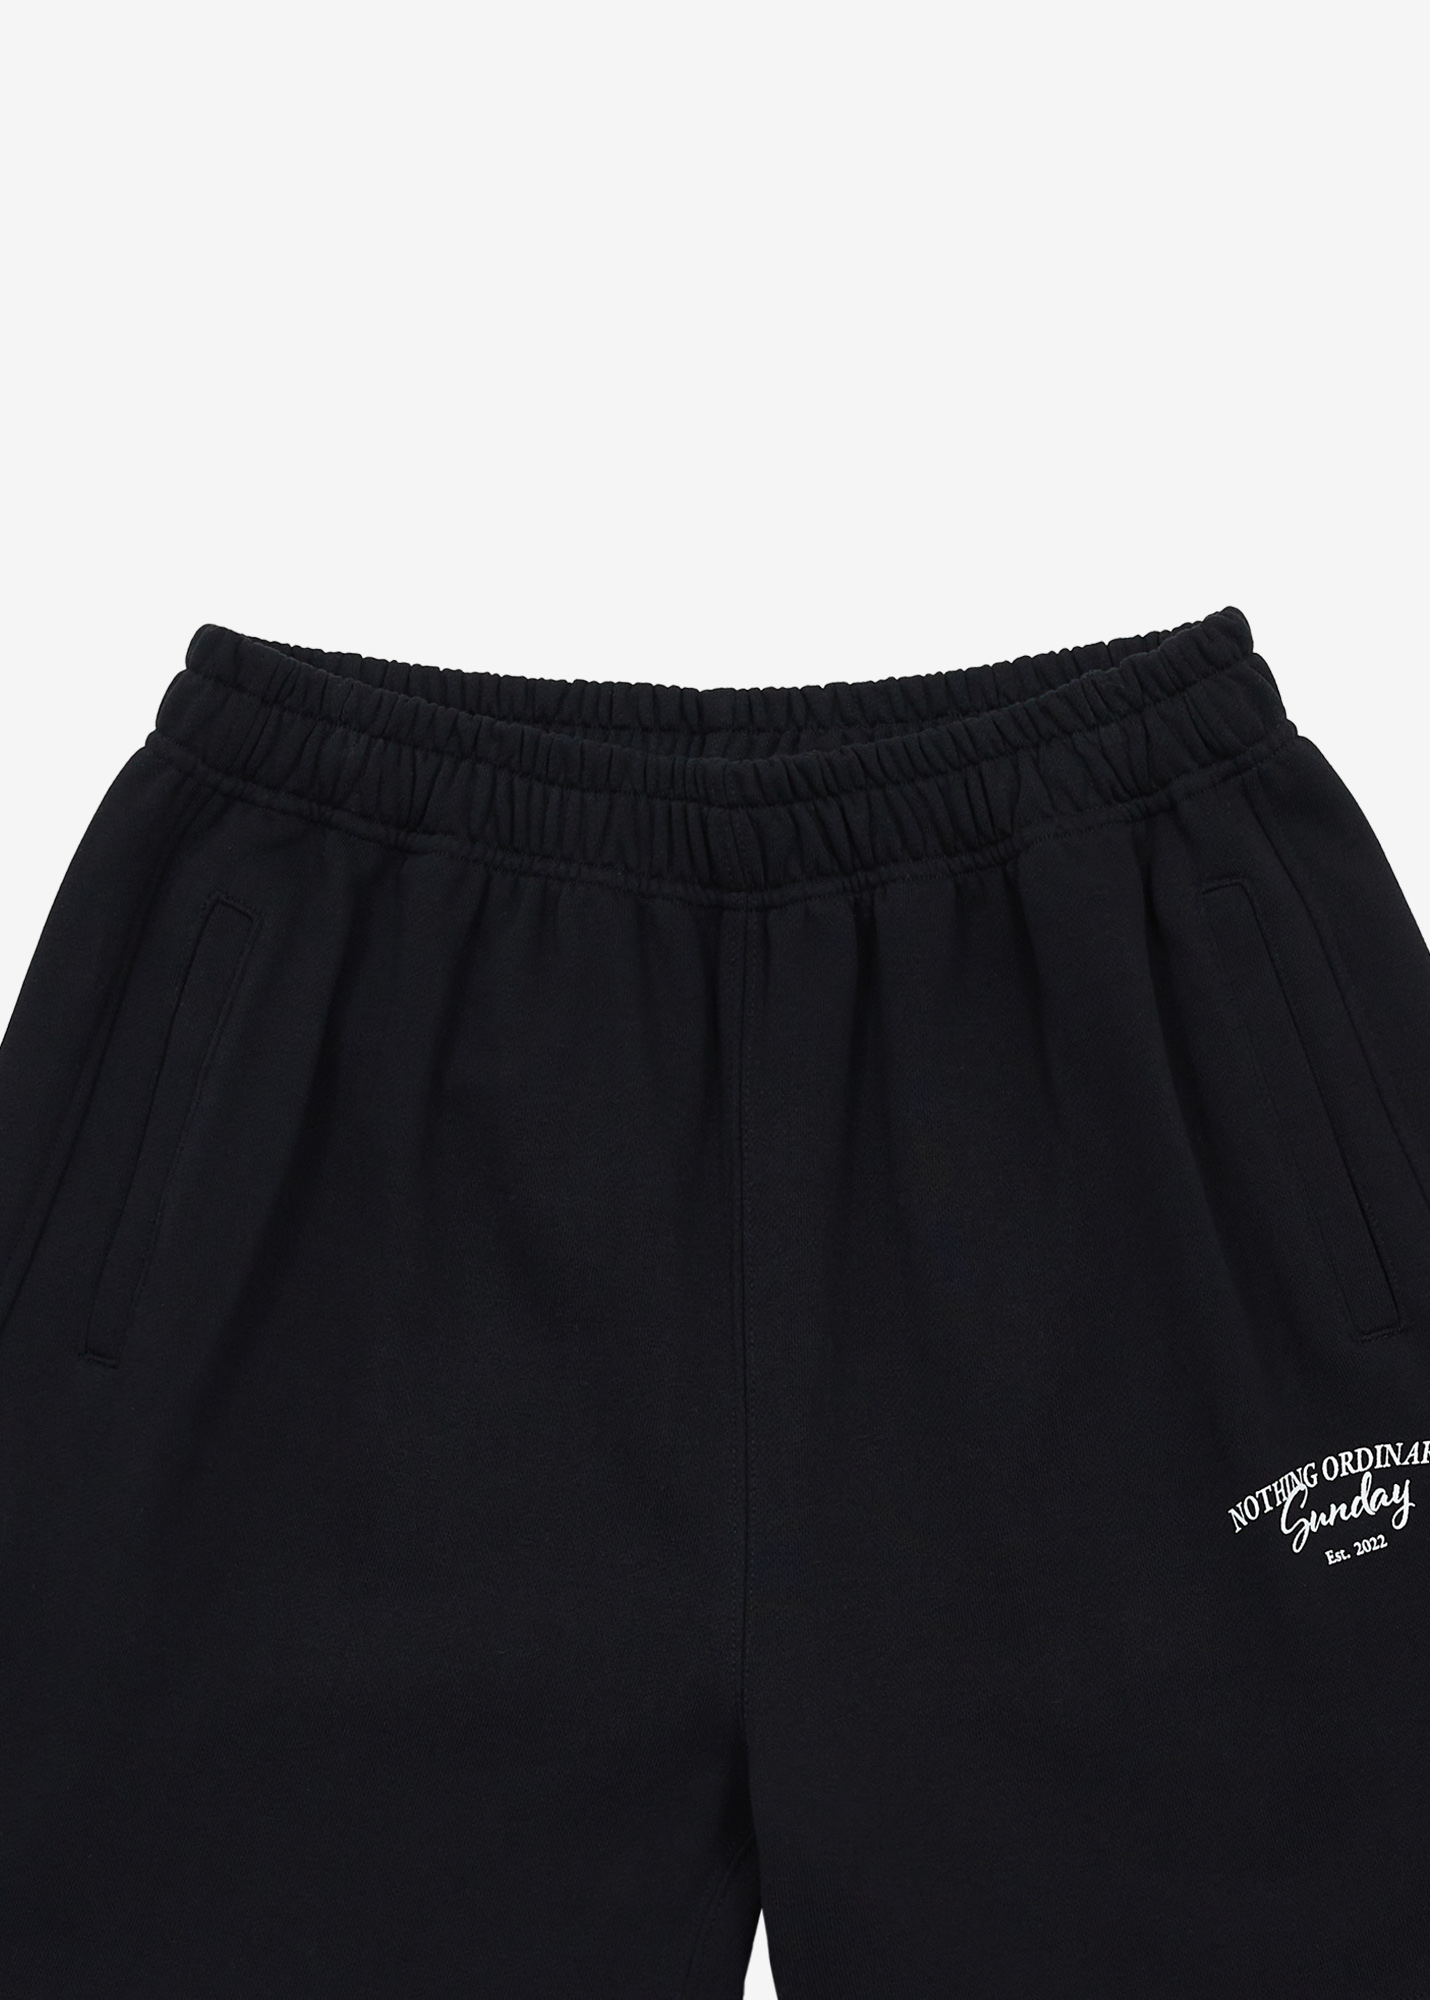 Sunday cursive graphic Short sweatpants - Black